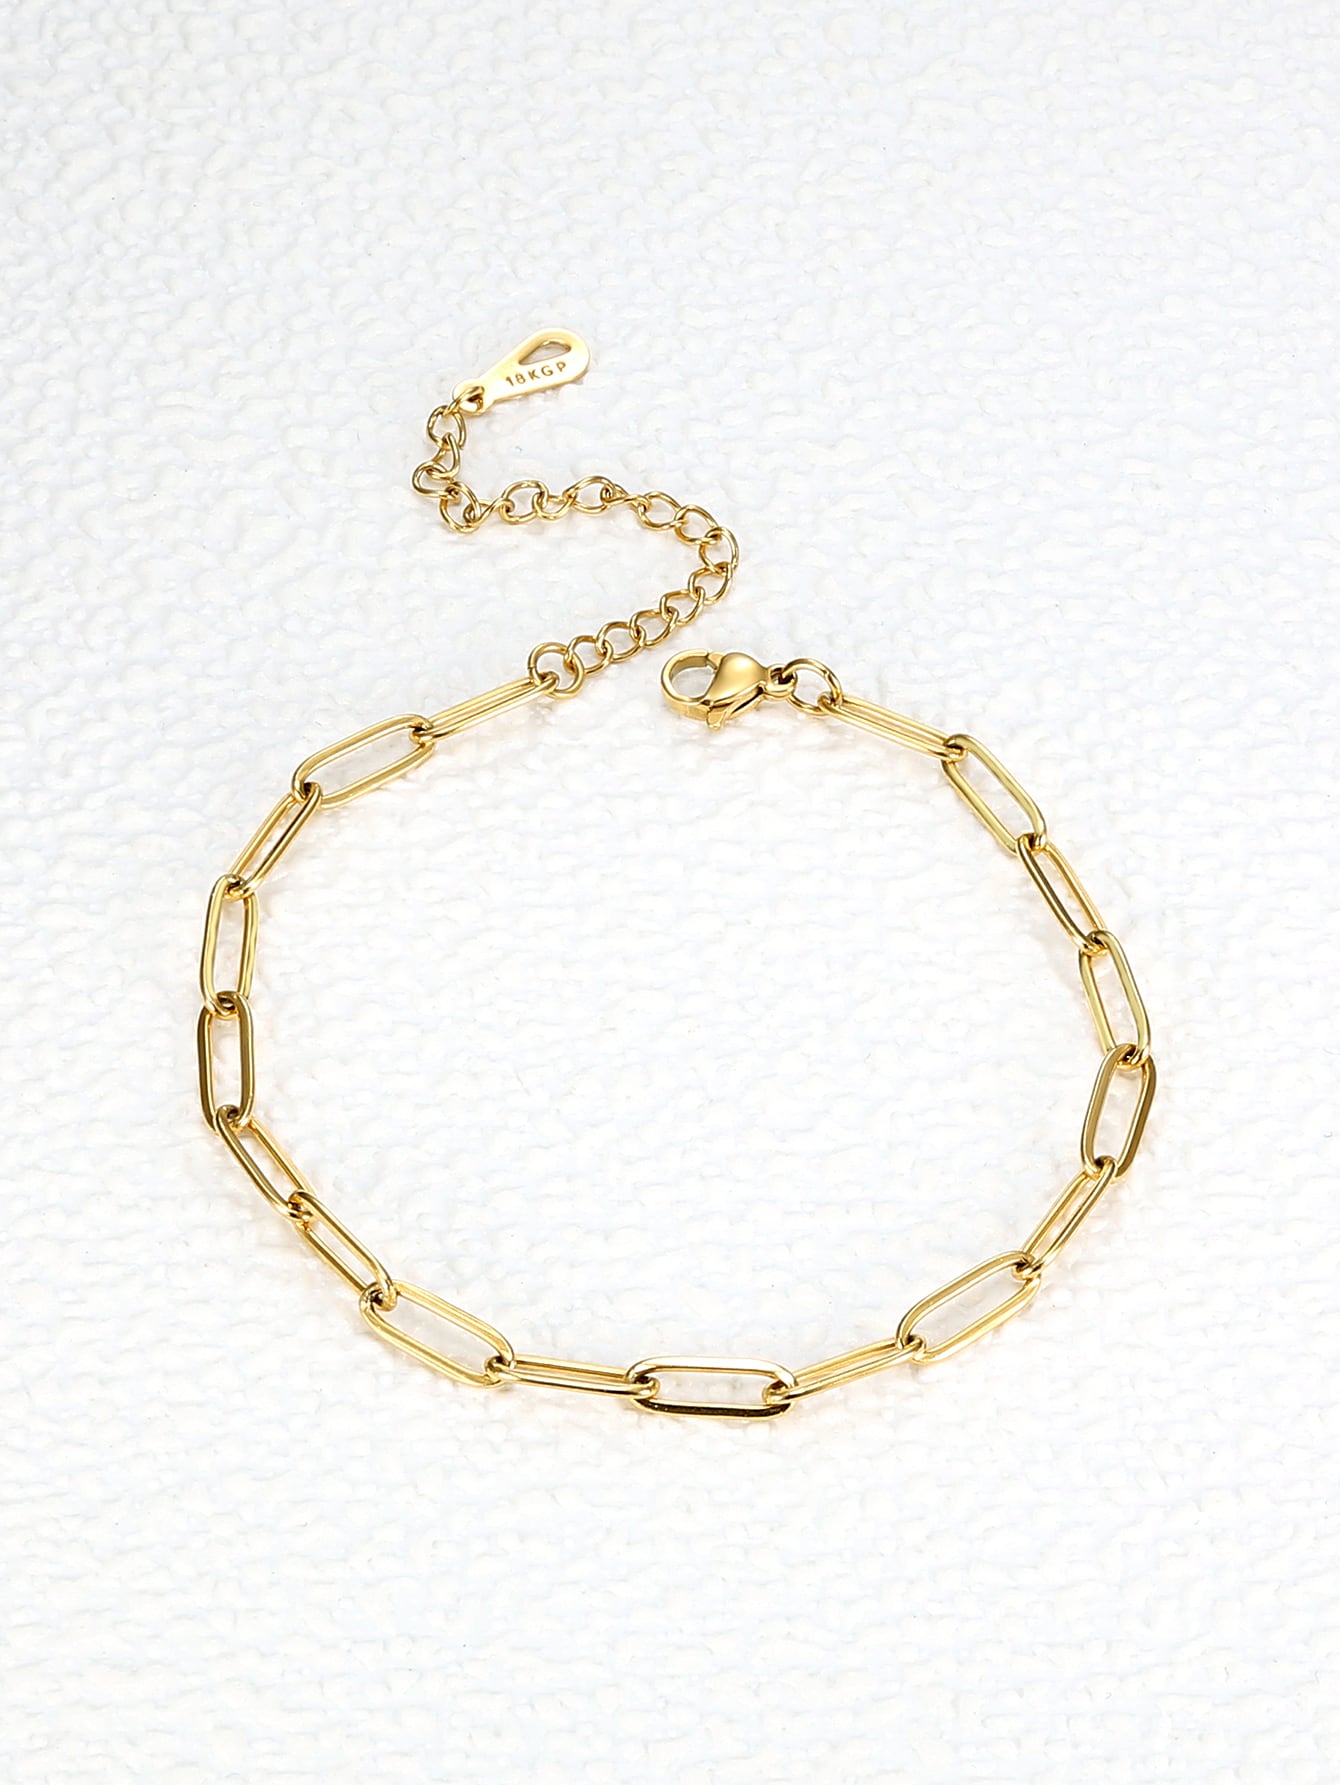 Minimalist Chain Bracelet for Women Girls Jewelry Fashion Access